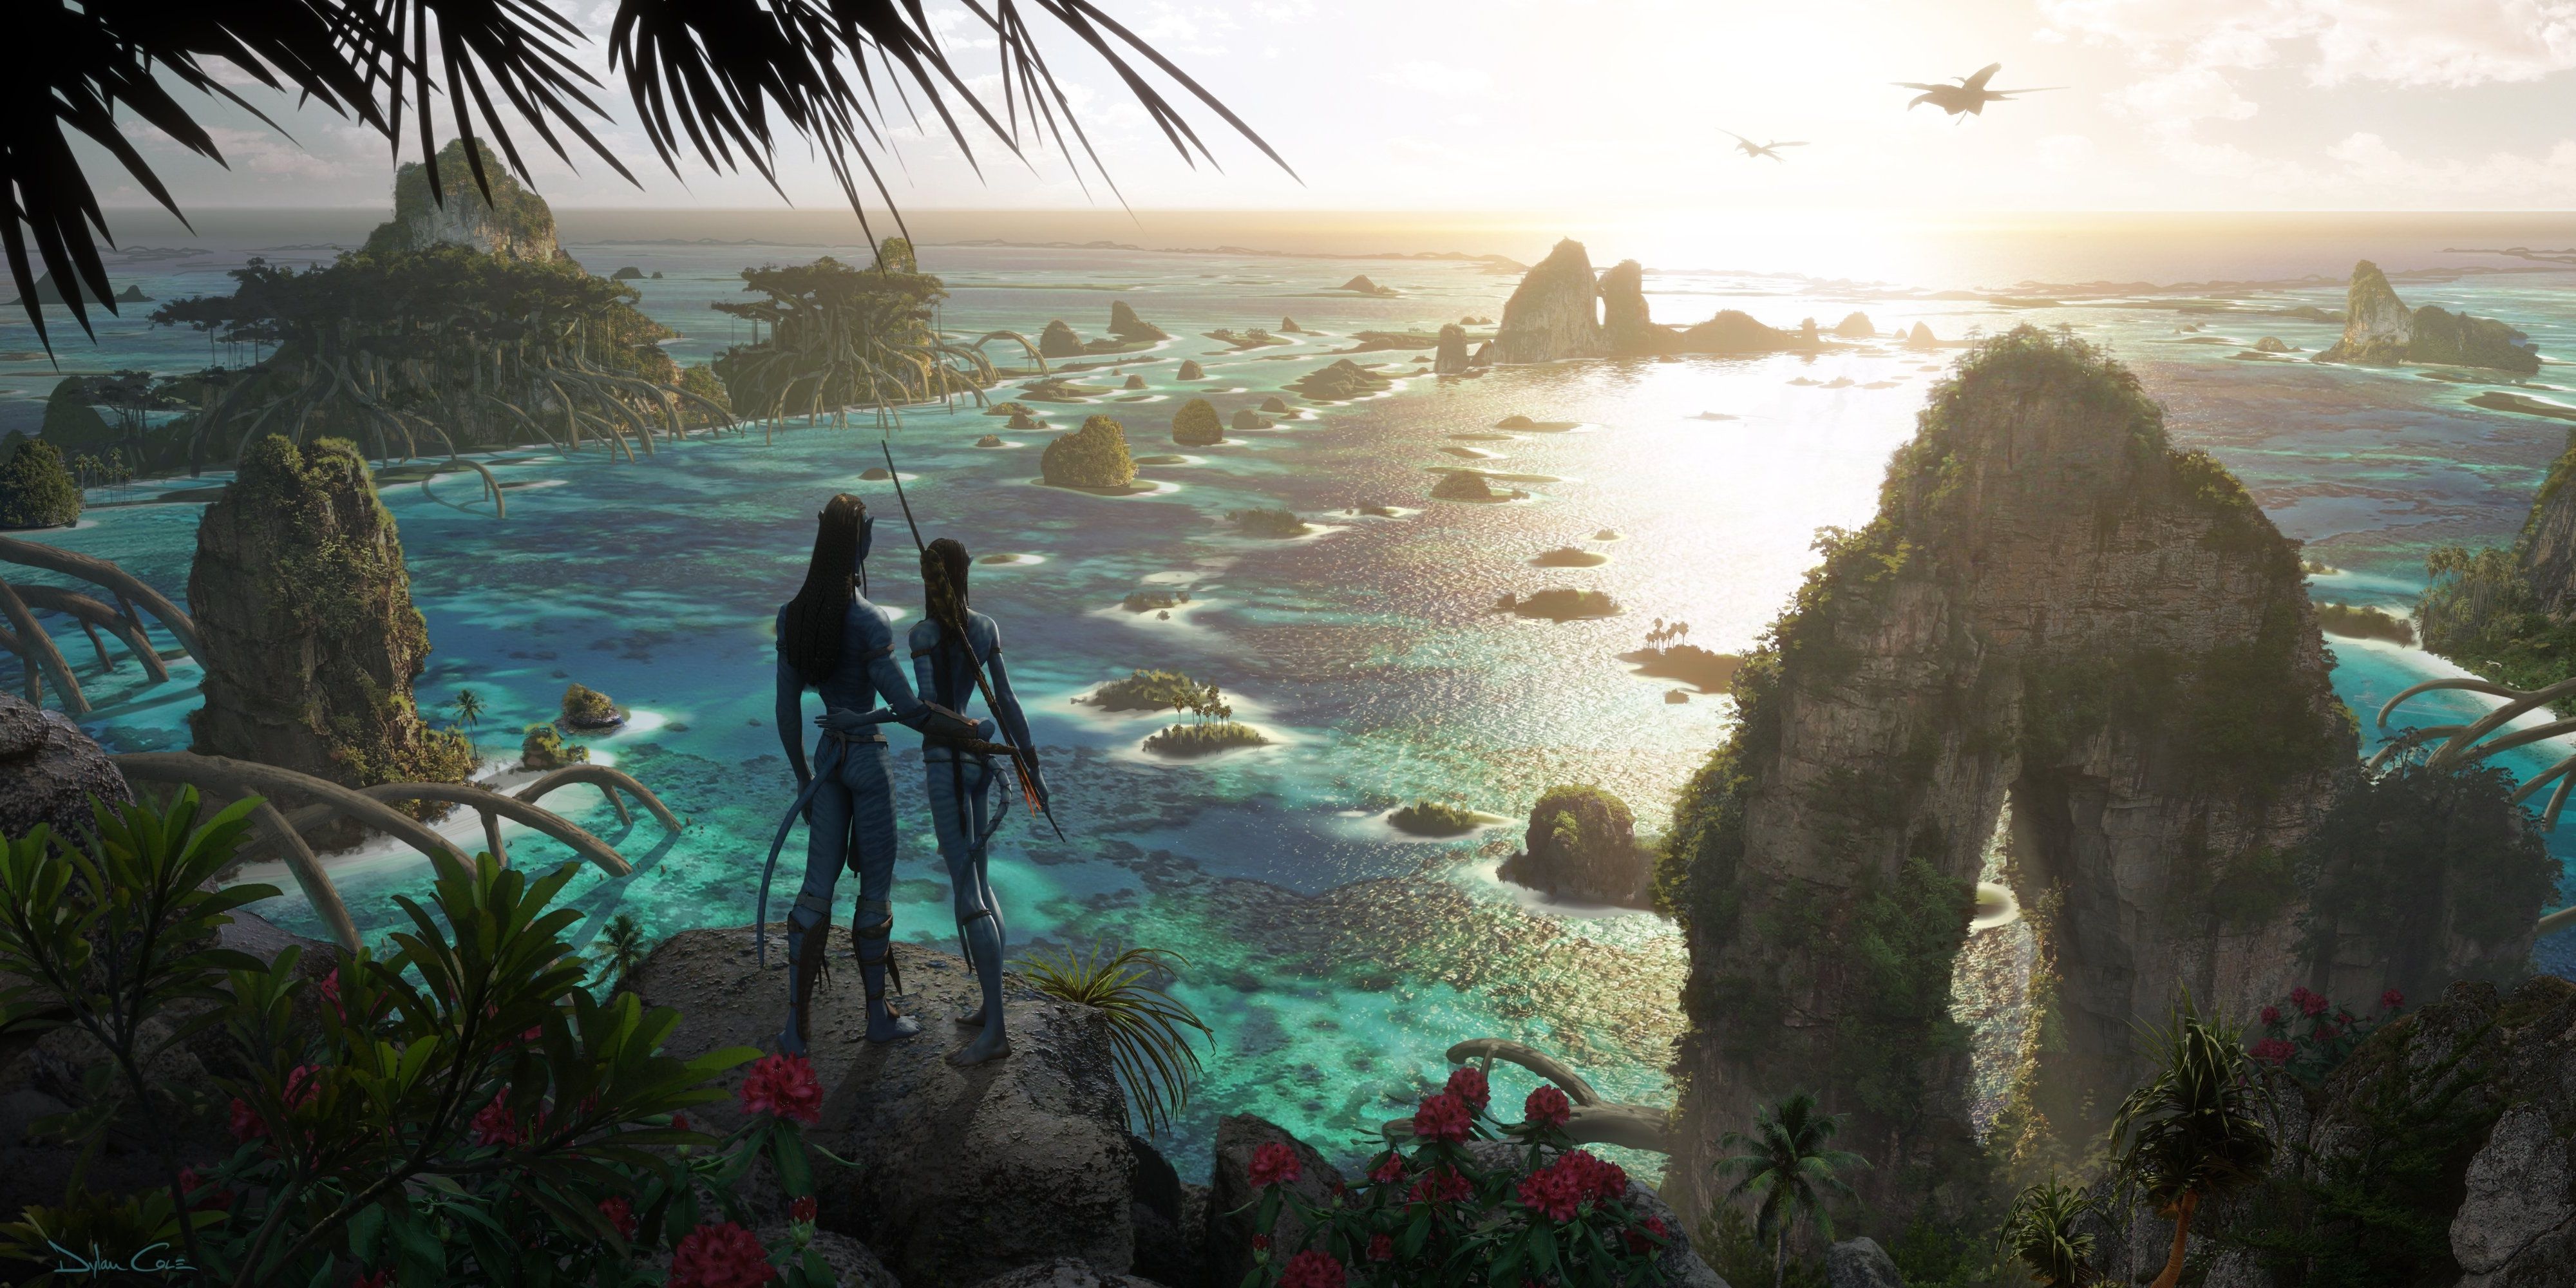 The navi looking across an ocean landscape on Pandora in Avatar 